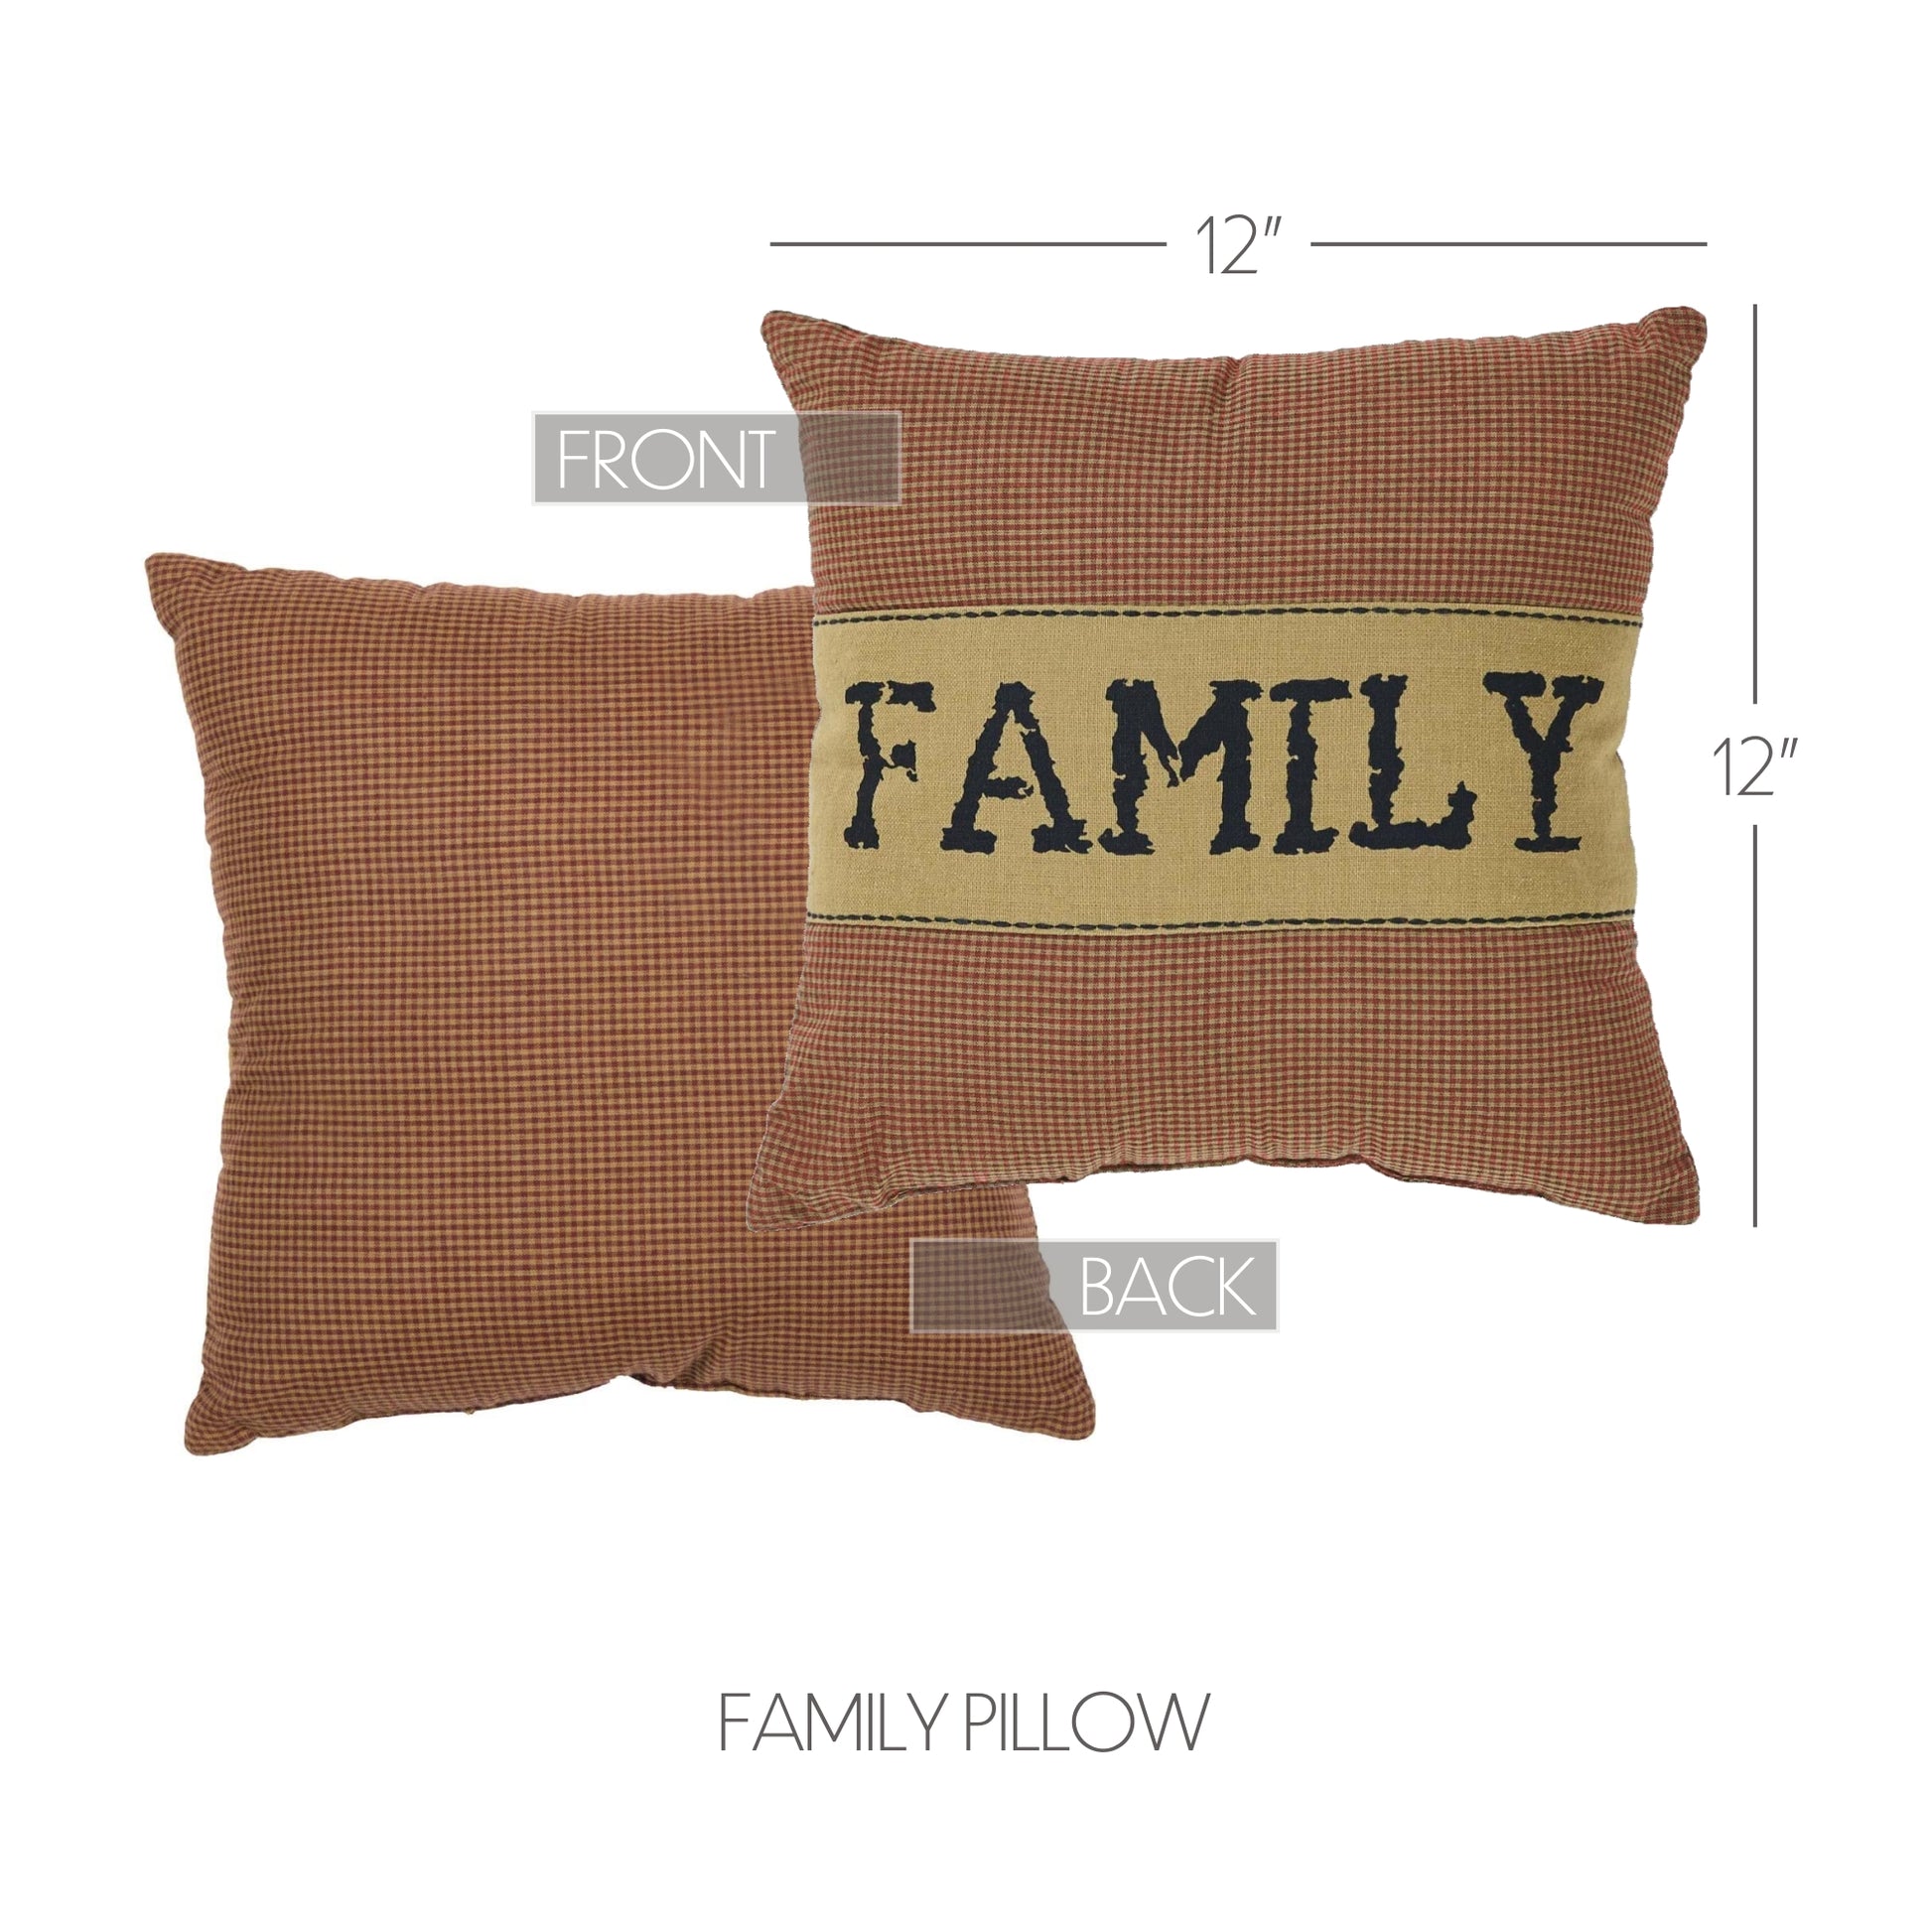 34264-Heritage-Farms-Family-Pillow-12x12-image-2